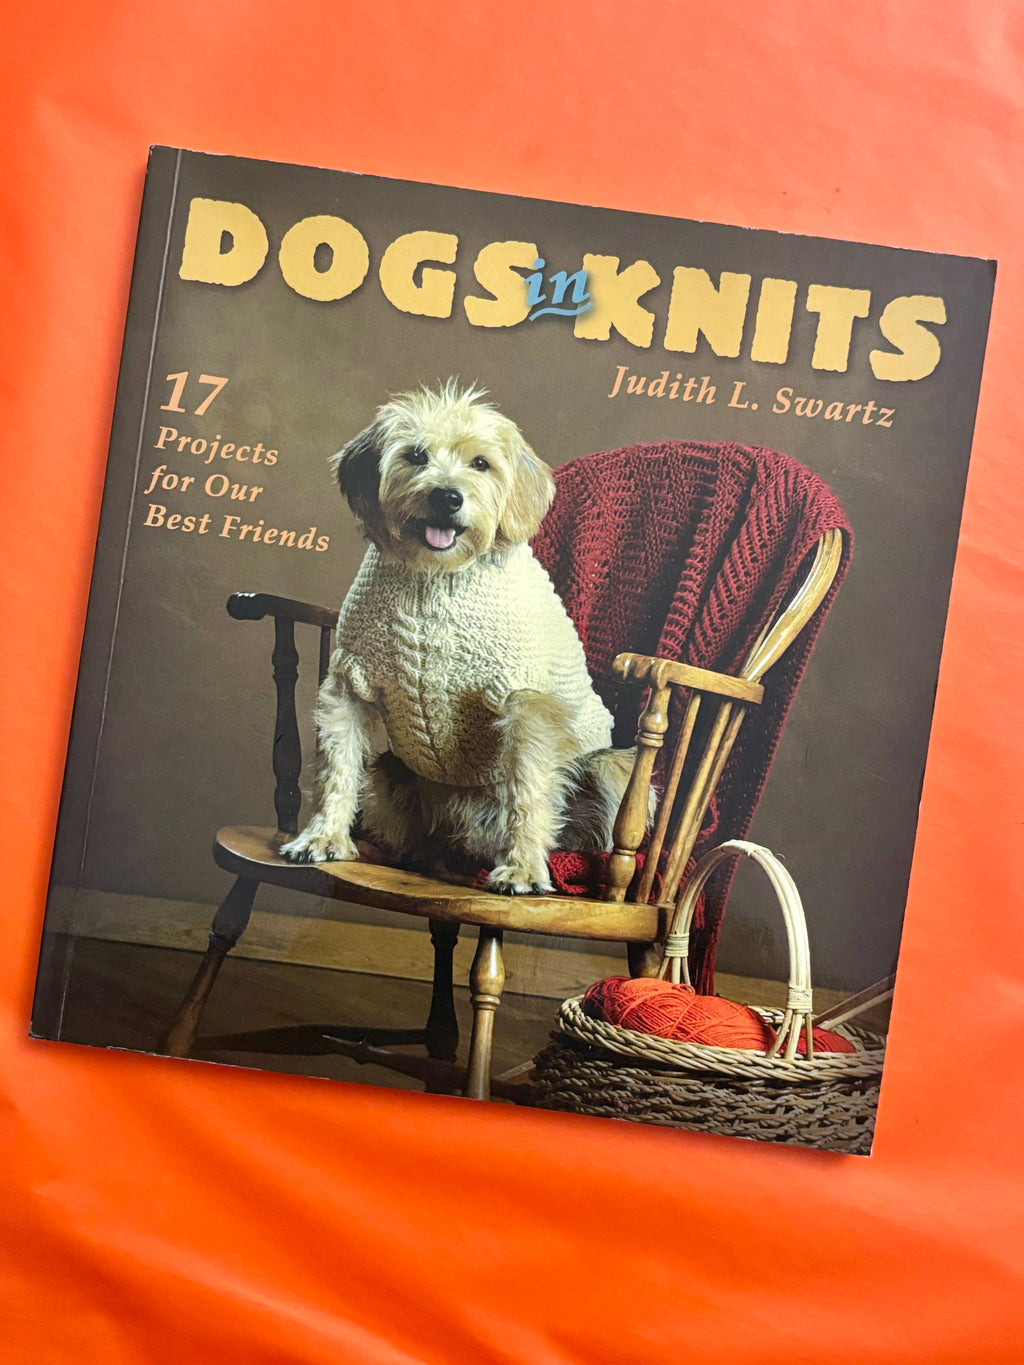 Dogs in Knits- By Judith L. Swartz